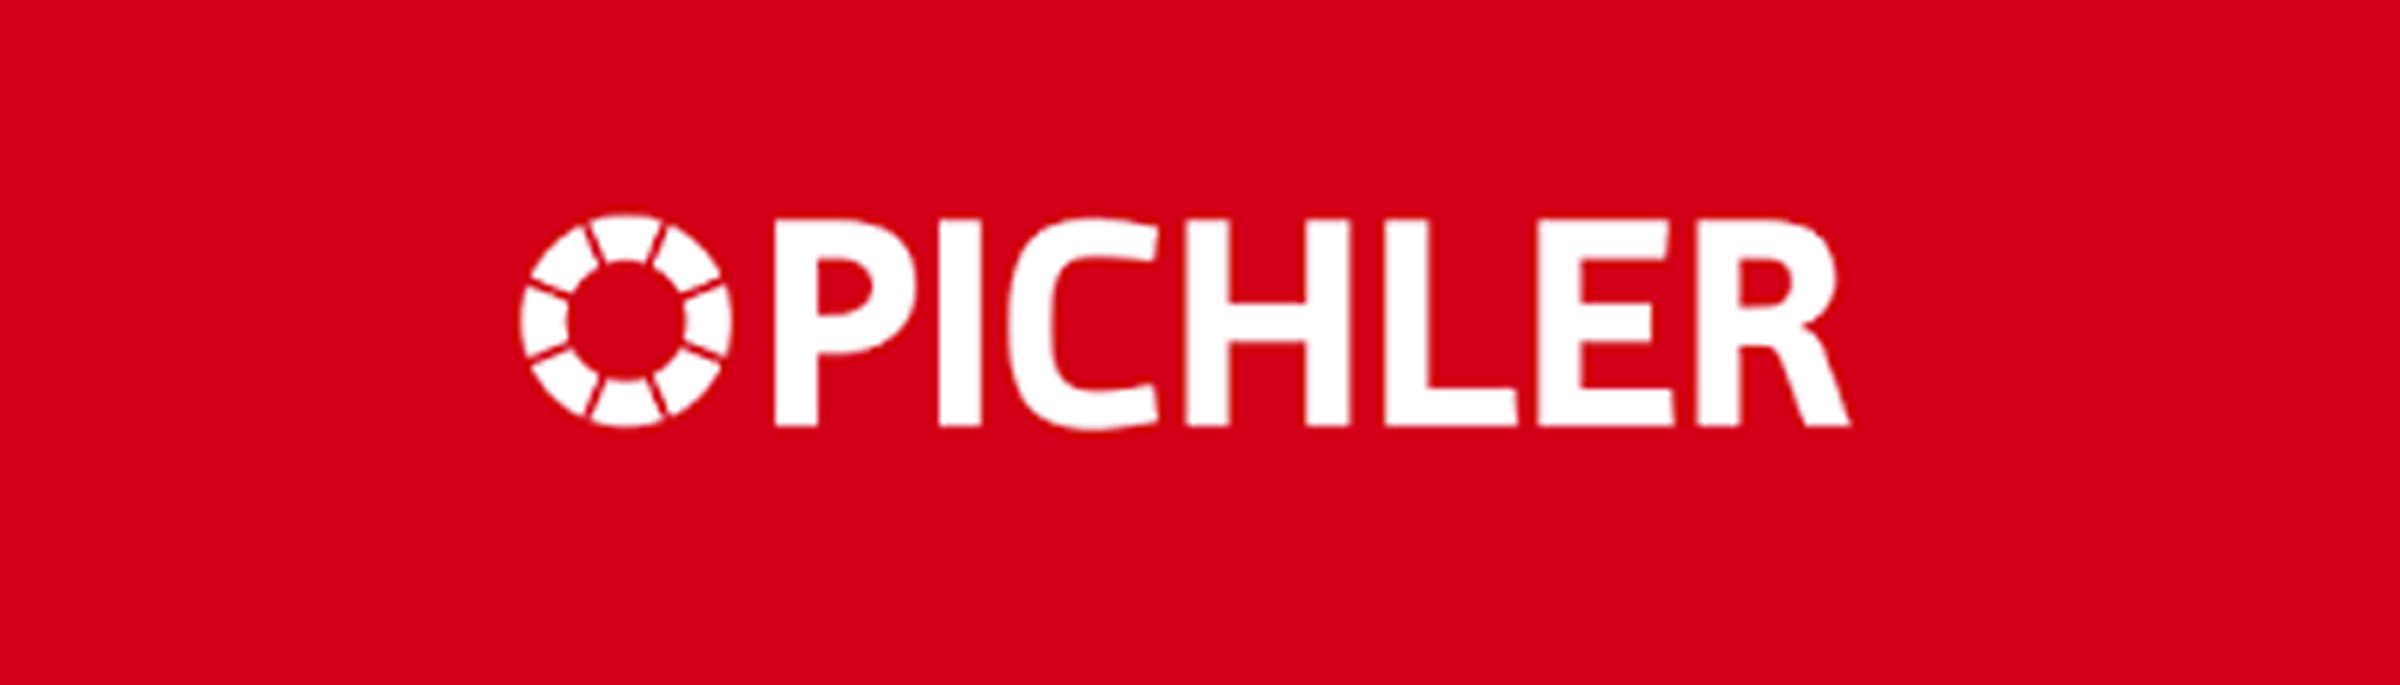 Pichler - Loxone